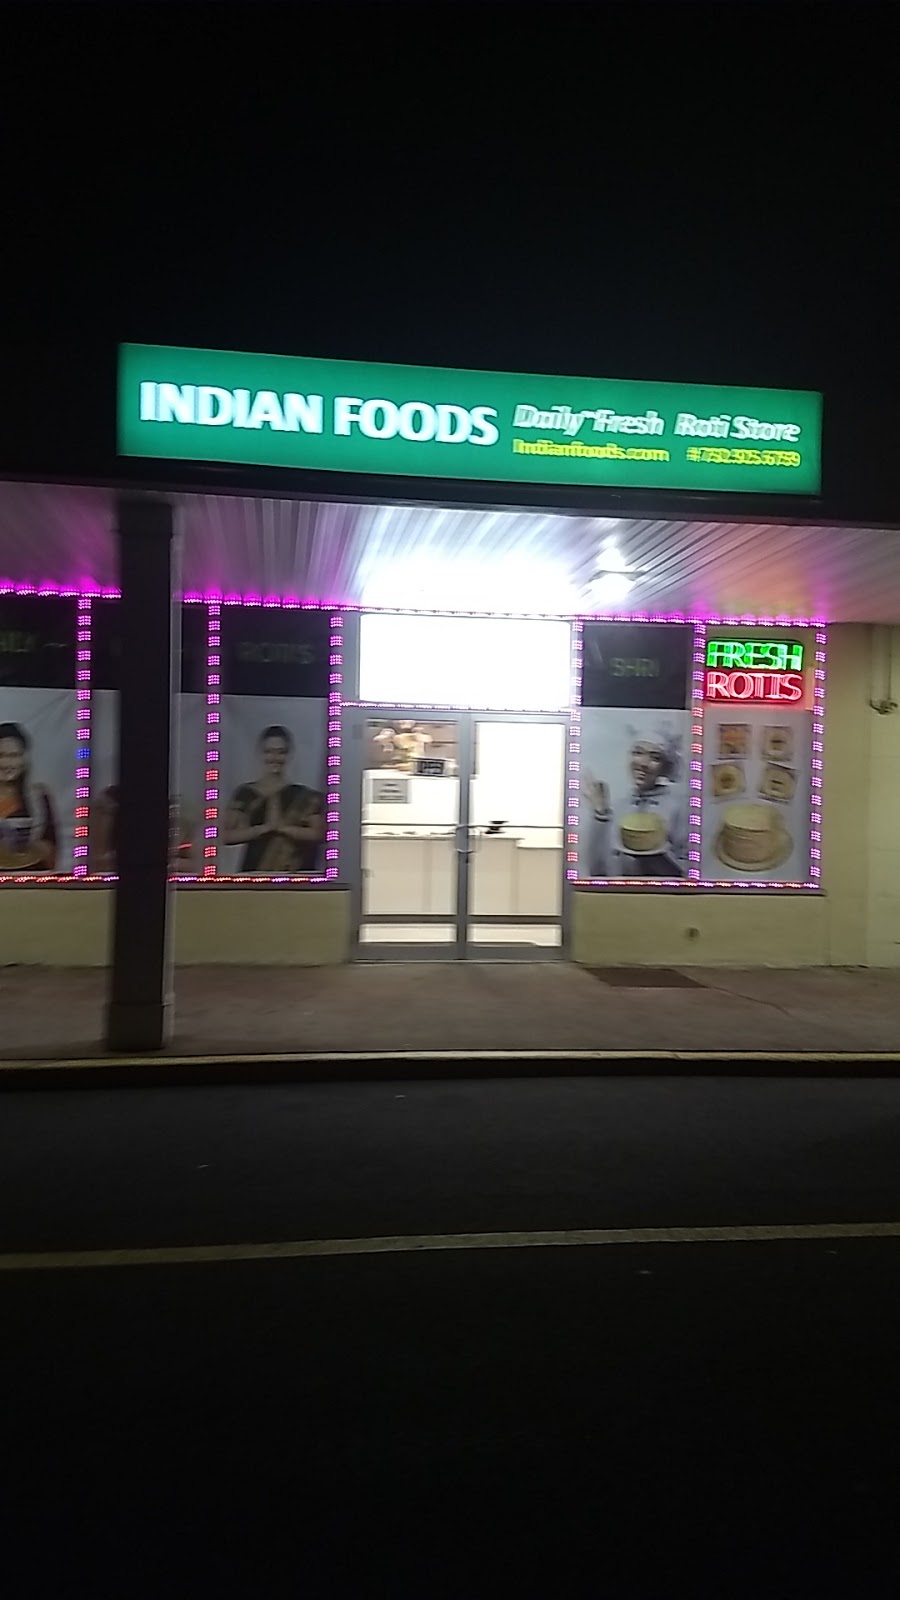 Indian Foods Daily Fresh Roti Store | 1250 NJ-27, Colonia, NJ 07067, USA | Phone: (732) 925-6759